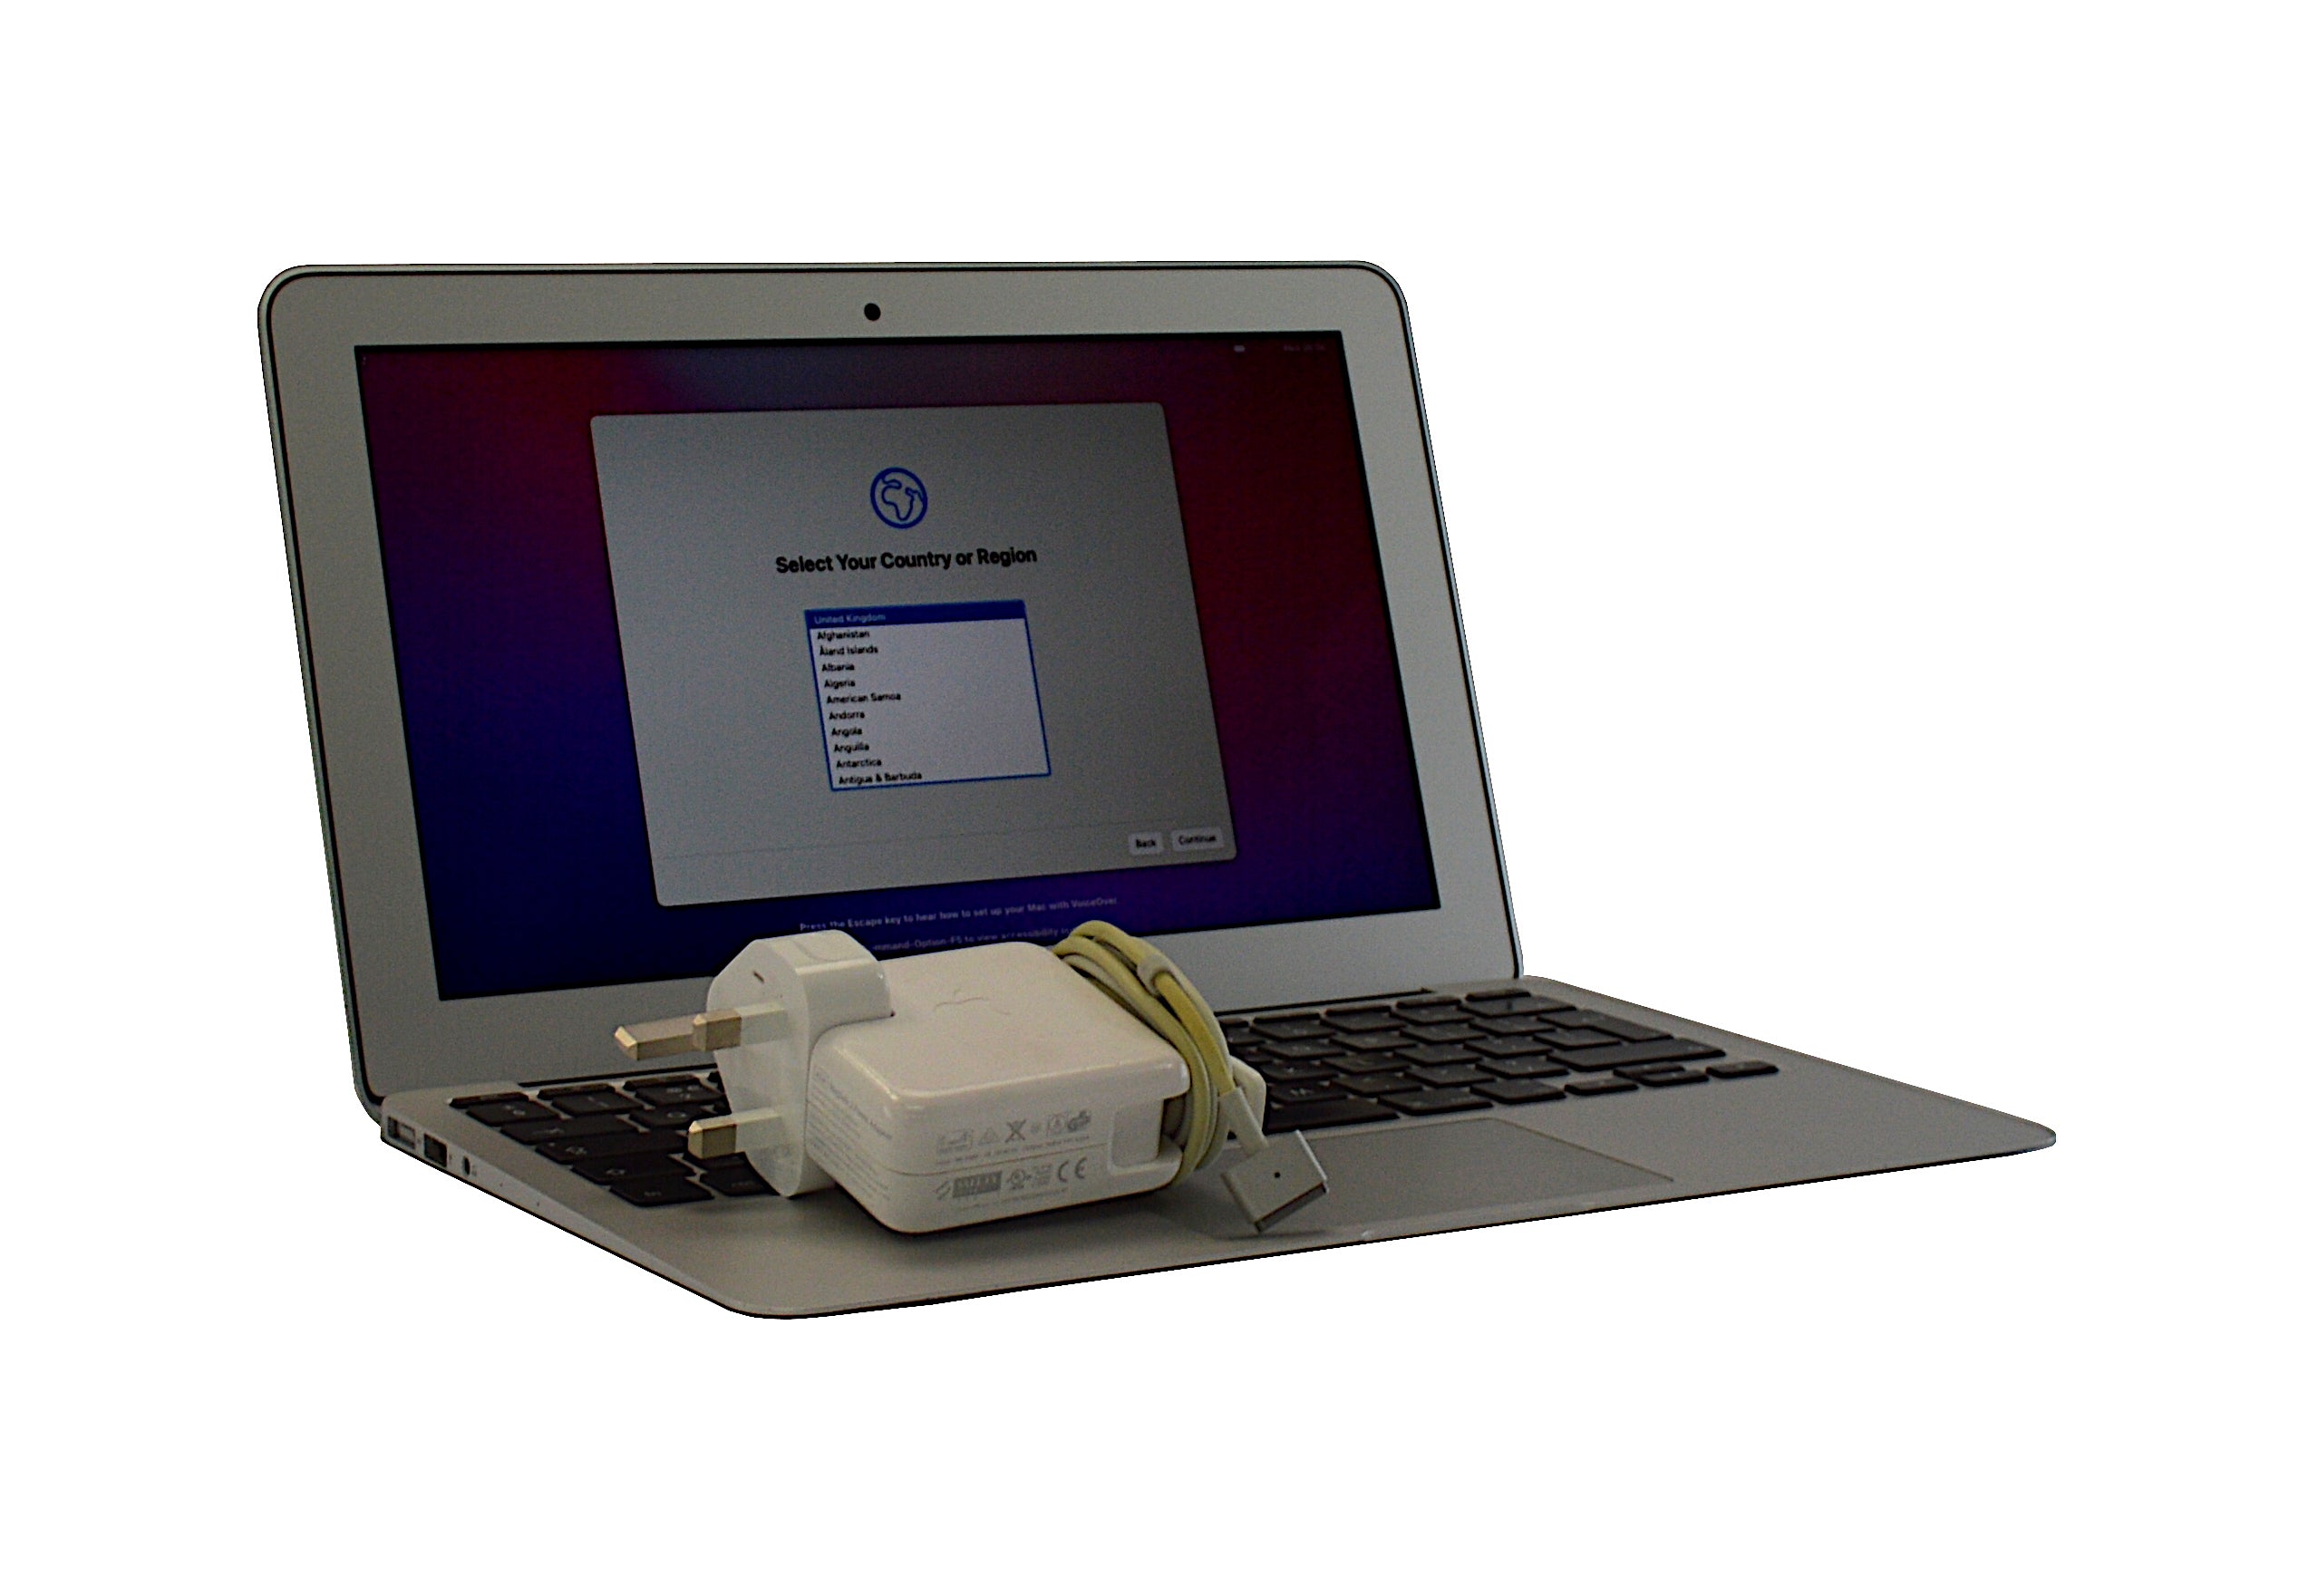 Apple MacBook Air 2015 Laptop, 11.6" Intel® Core™ i5, 4GB RAM, 128GB SSD, A1465